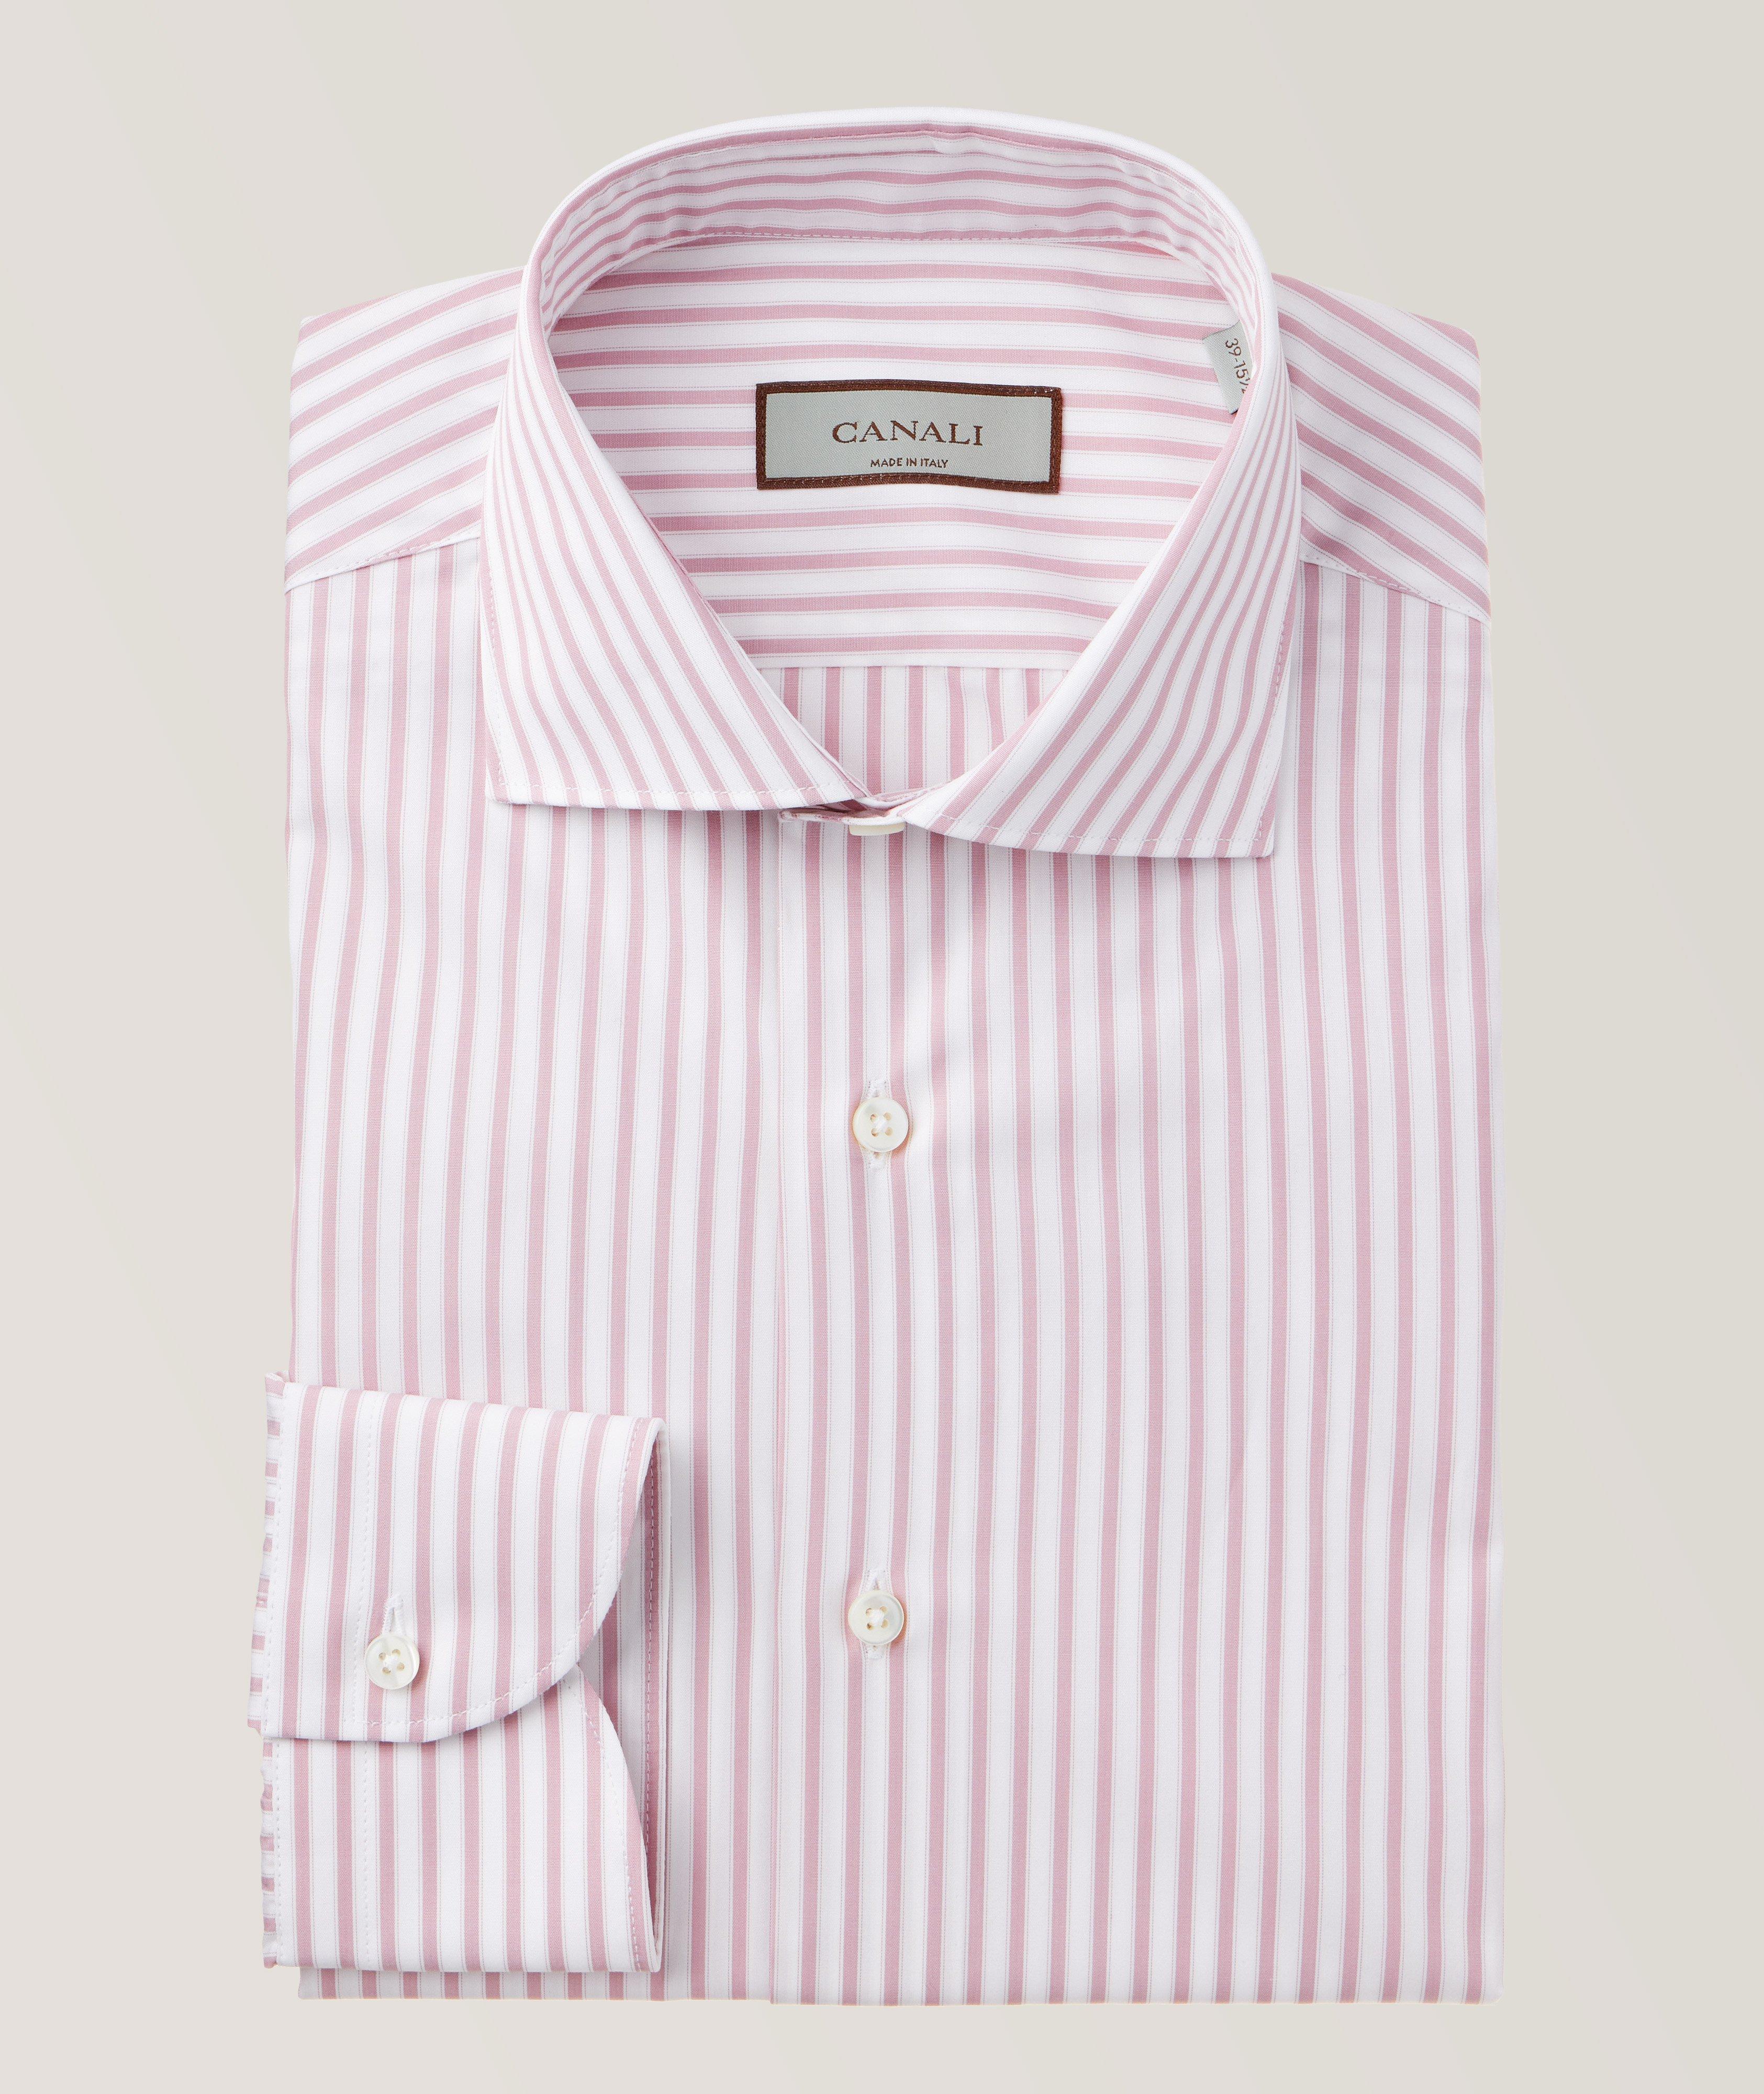 Canali Slim-Fit Striped Pattern Dress Shirt